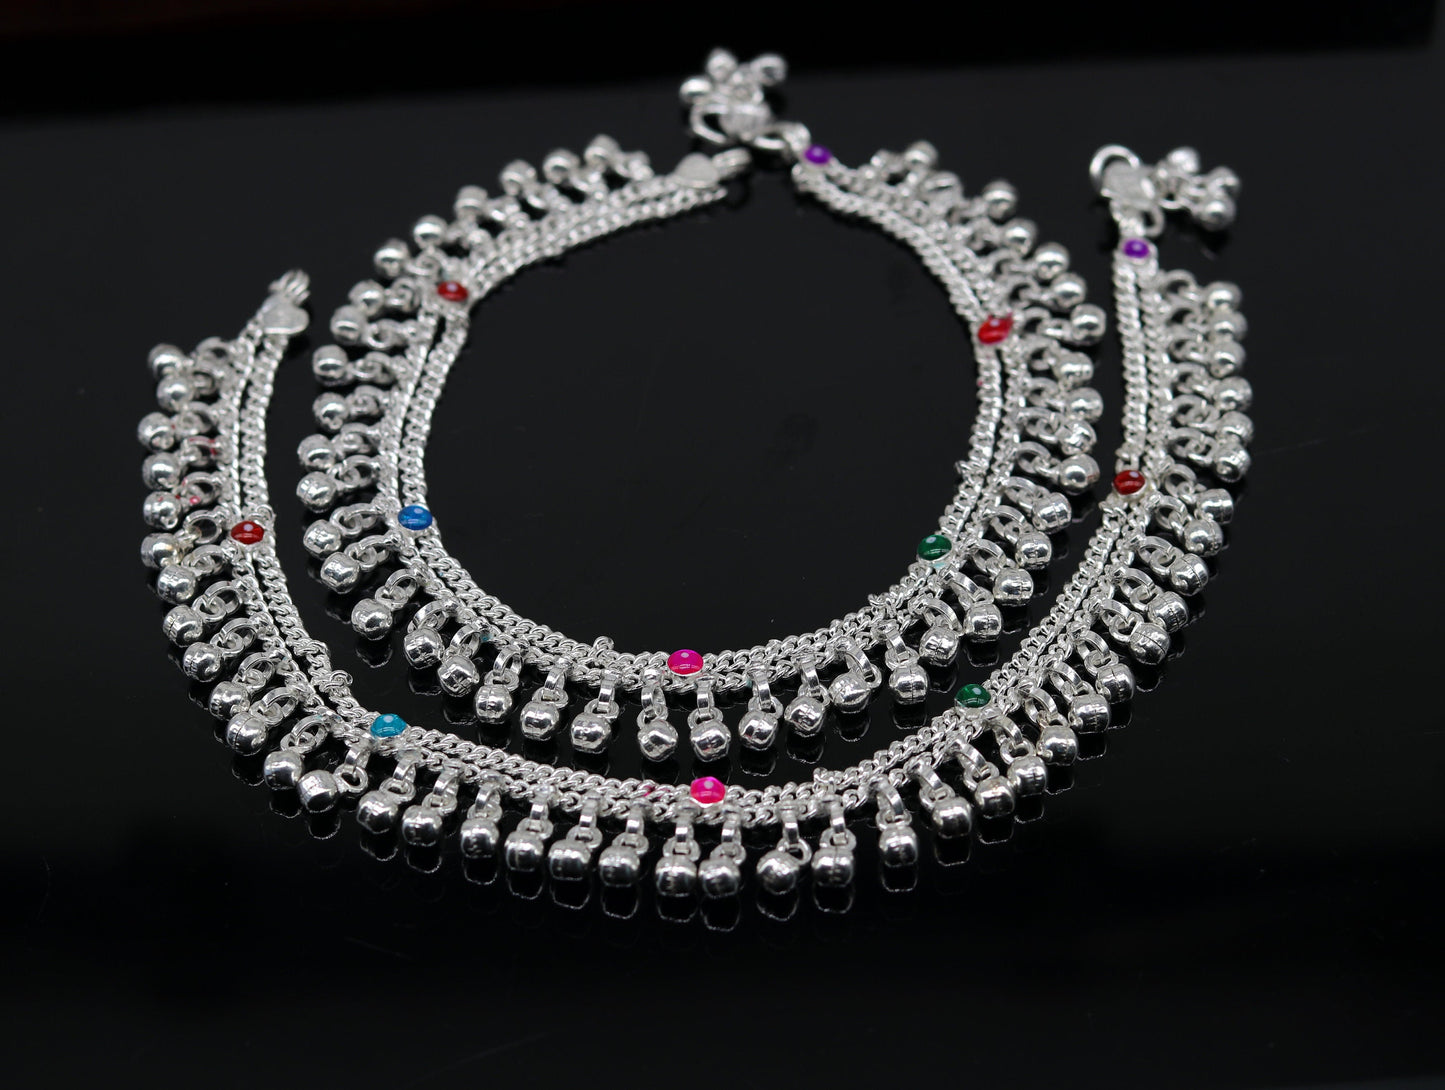 10" Sterling silver handmade double chain anklets bracelet, best jingling noisy ankles feet bracelet charm belly dance jewelry india ank259 - TRIBAL ORNAMENTS